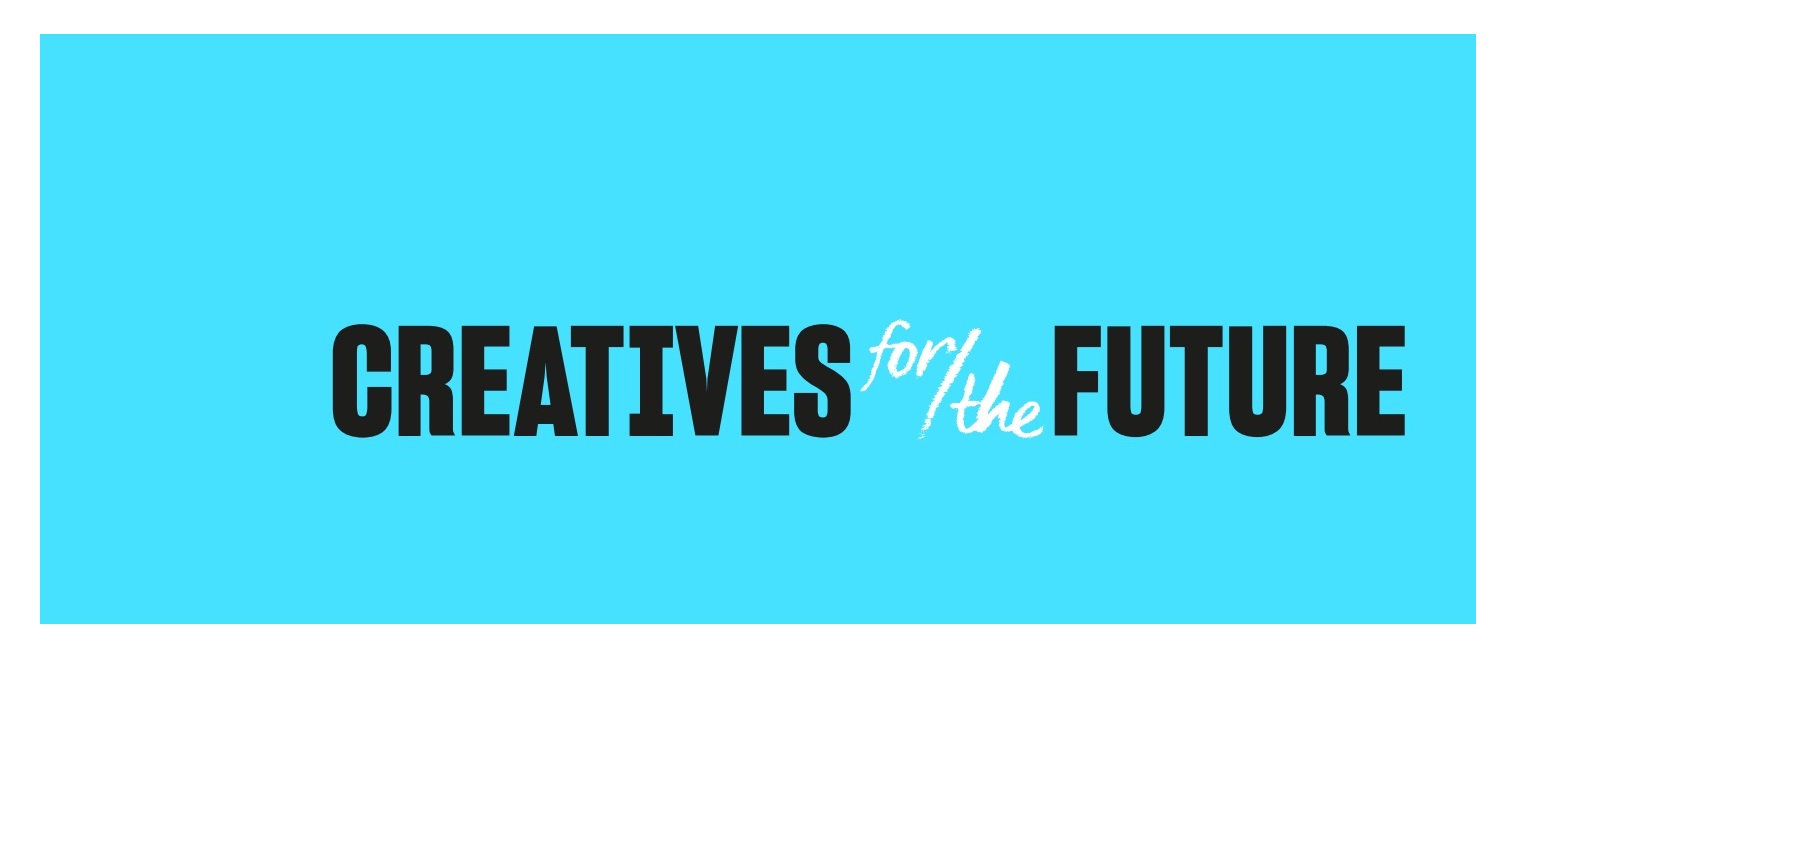 Nace ,Creatives ,for the future,sostenibilidad ,industria ,creativa , clientes, programapublicidad